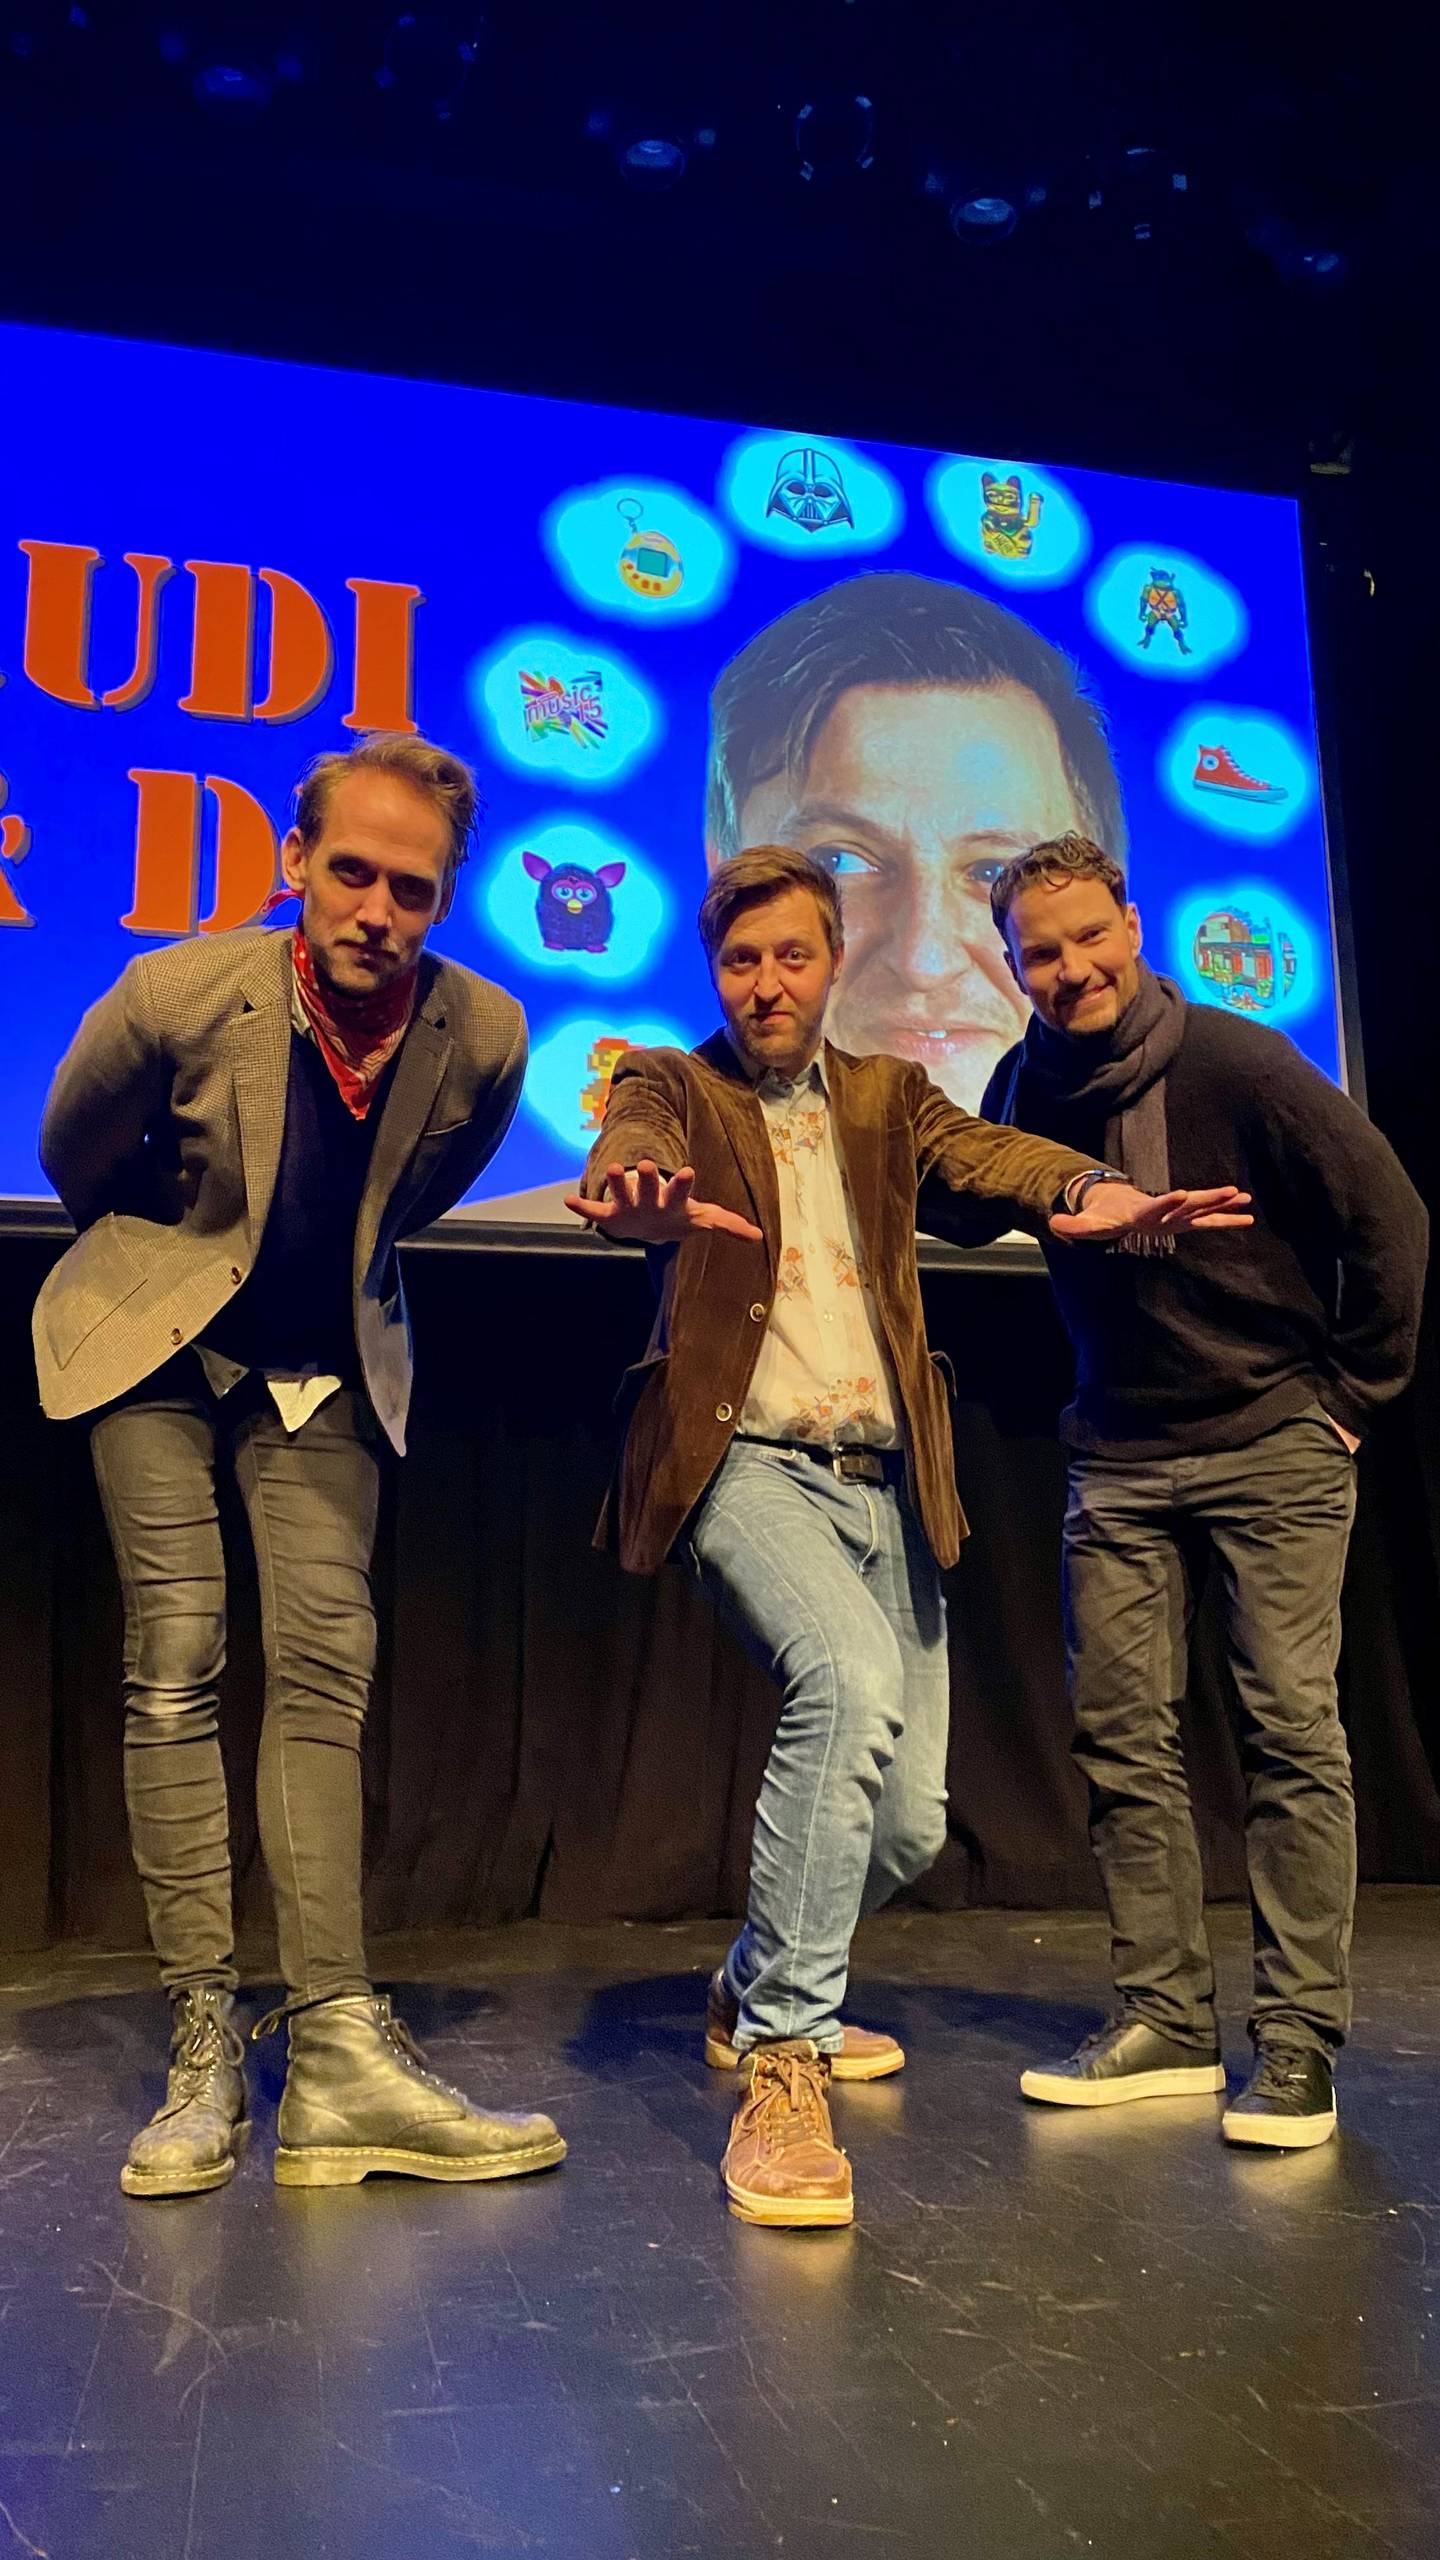 Fra venstre: Anders Brunvær Hauge, Rudi Bjørknes Gundersen og Henrik Tangen. Forestillingen Rudi & Di har premiere på Humorhuset Stavangeren 3. mai.